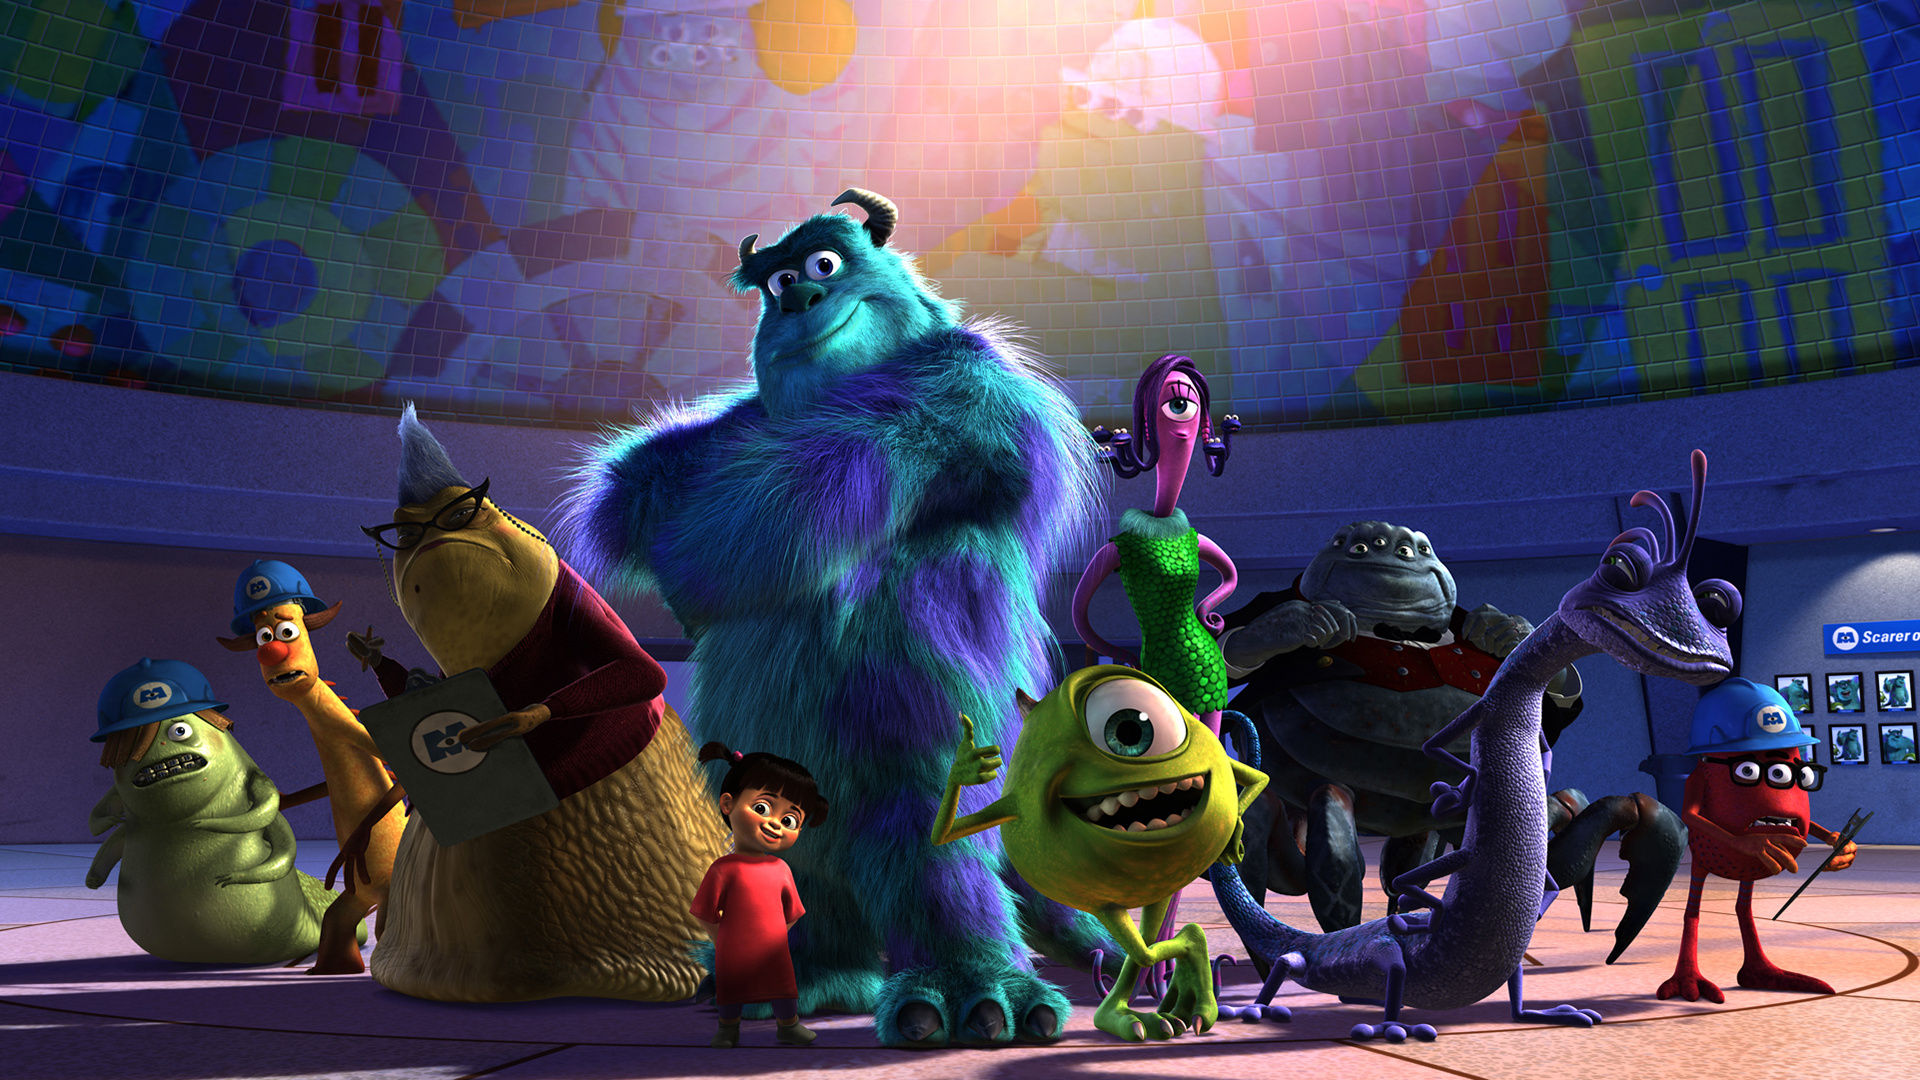 Monsters Inc. cartoon wallpapers, Beloved Pixar movie, Fun monster characters, Playful animation, 1920x1080 Full HD Desktop